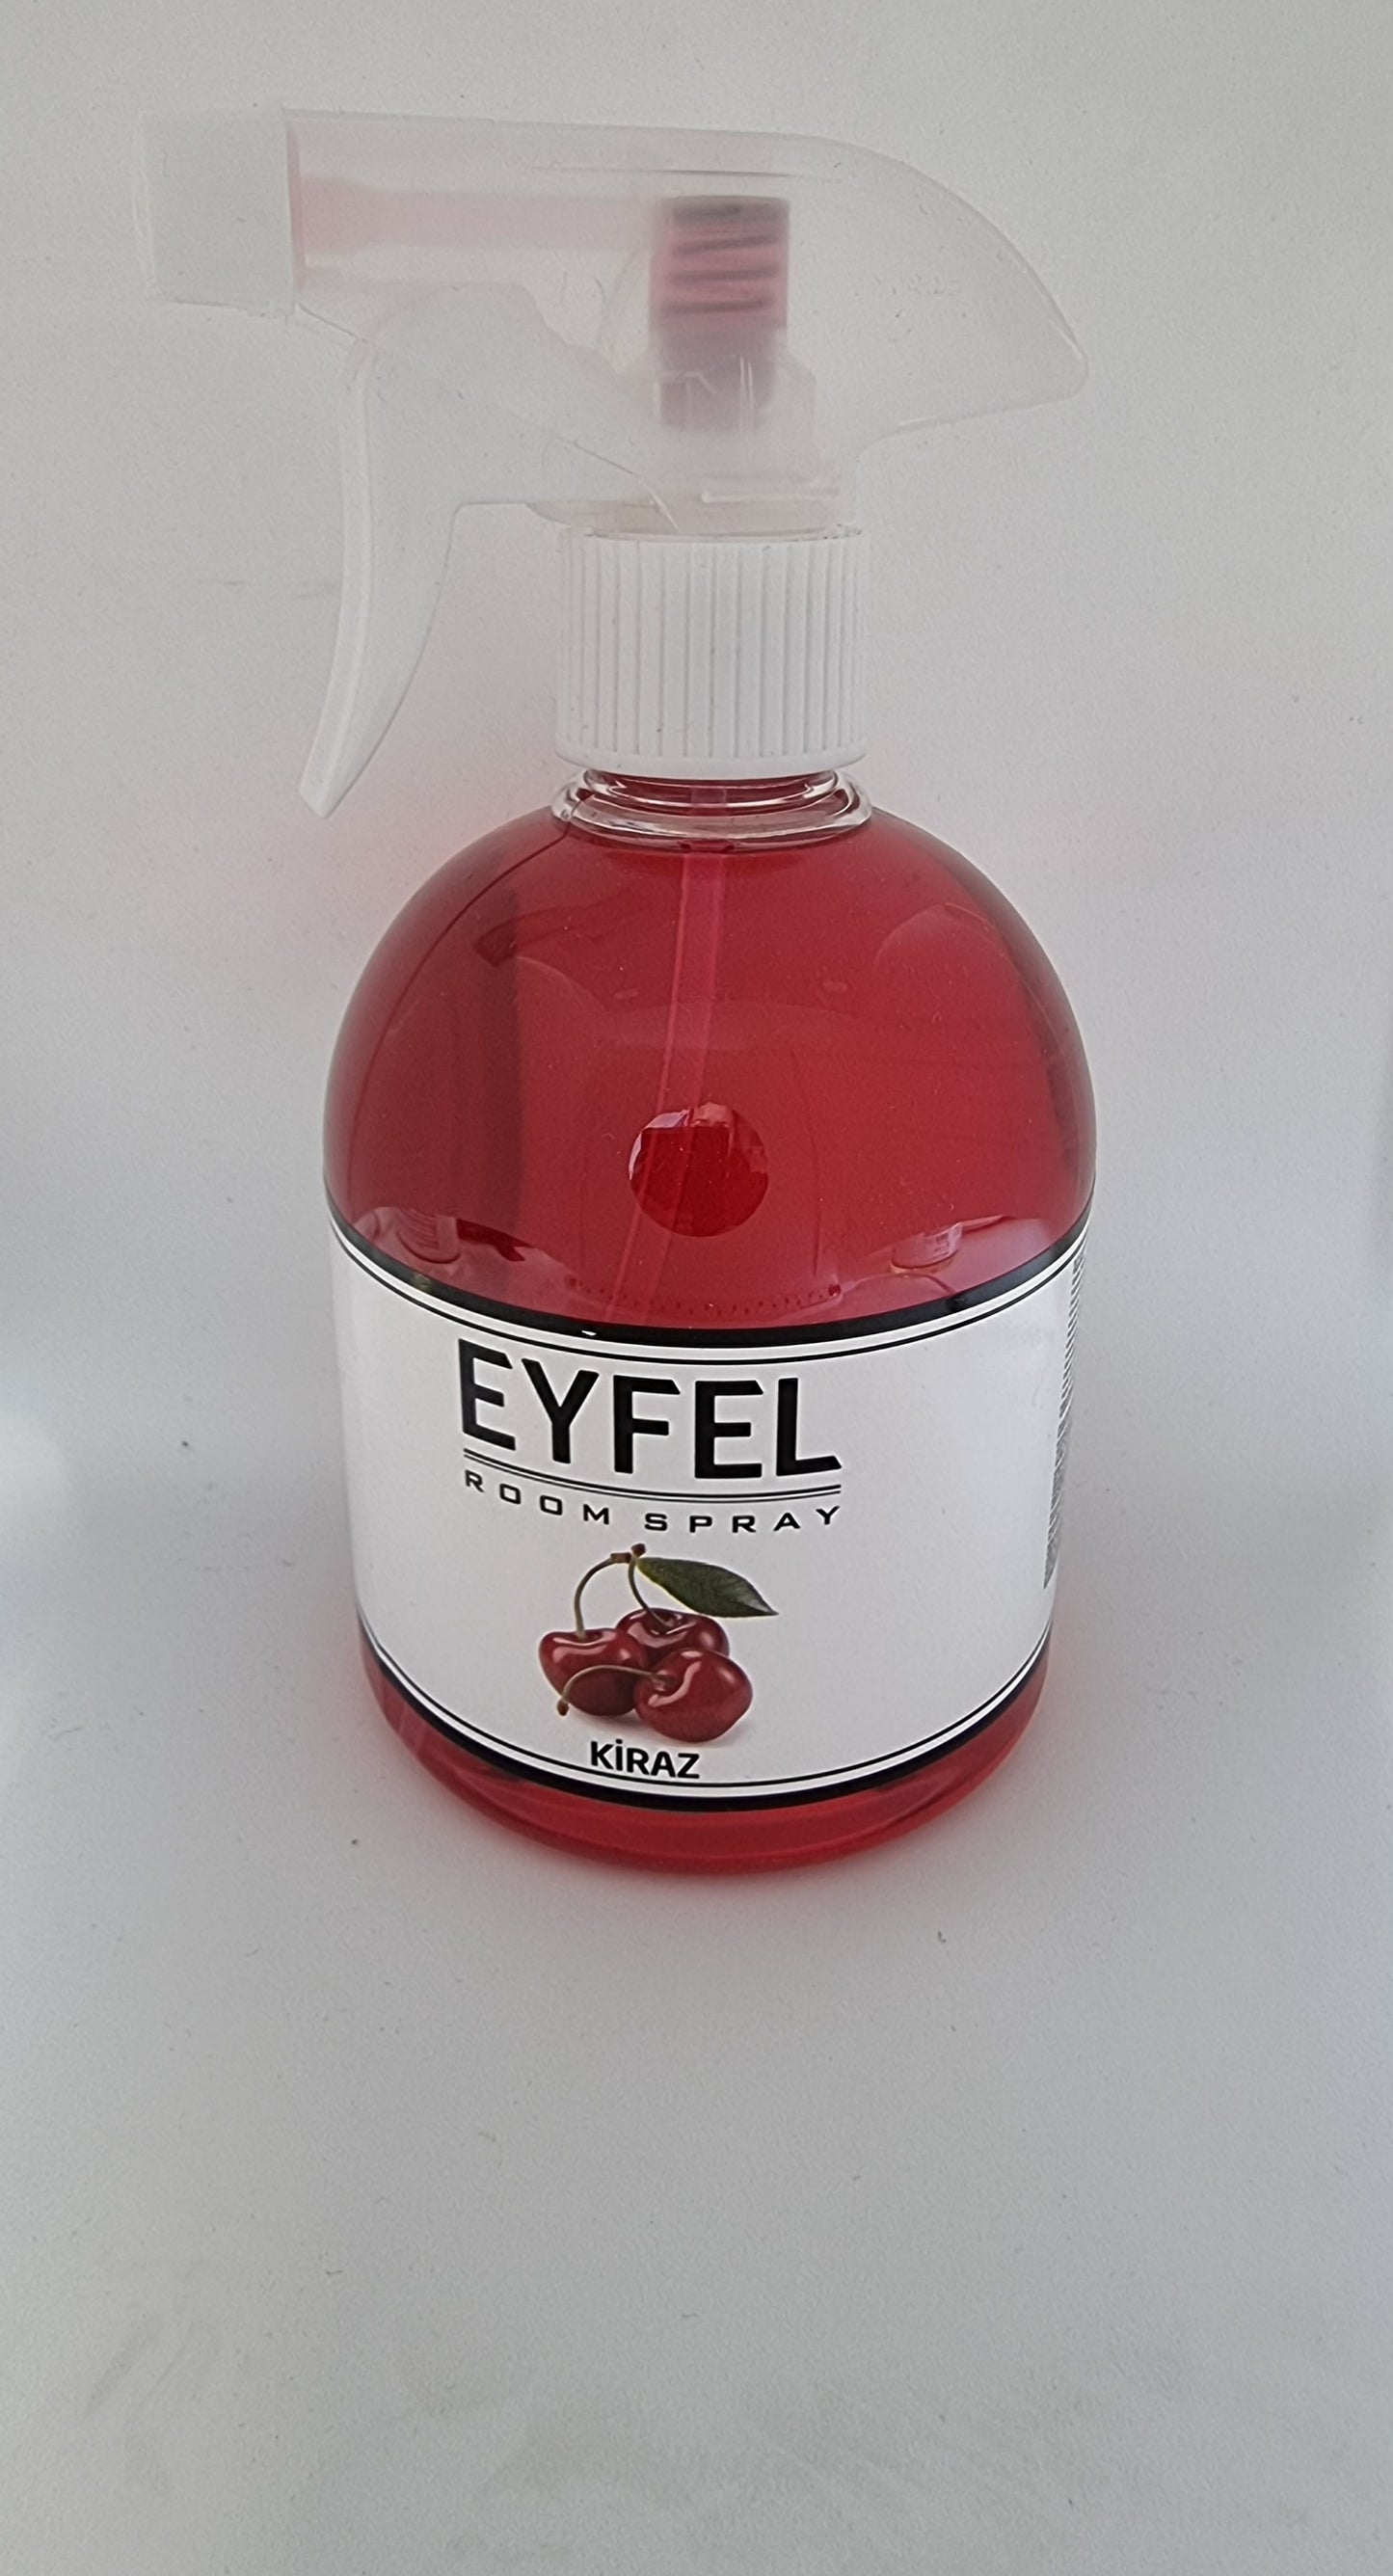 Eyfel Room Spray